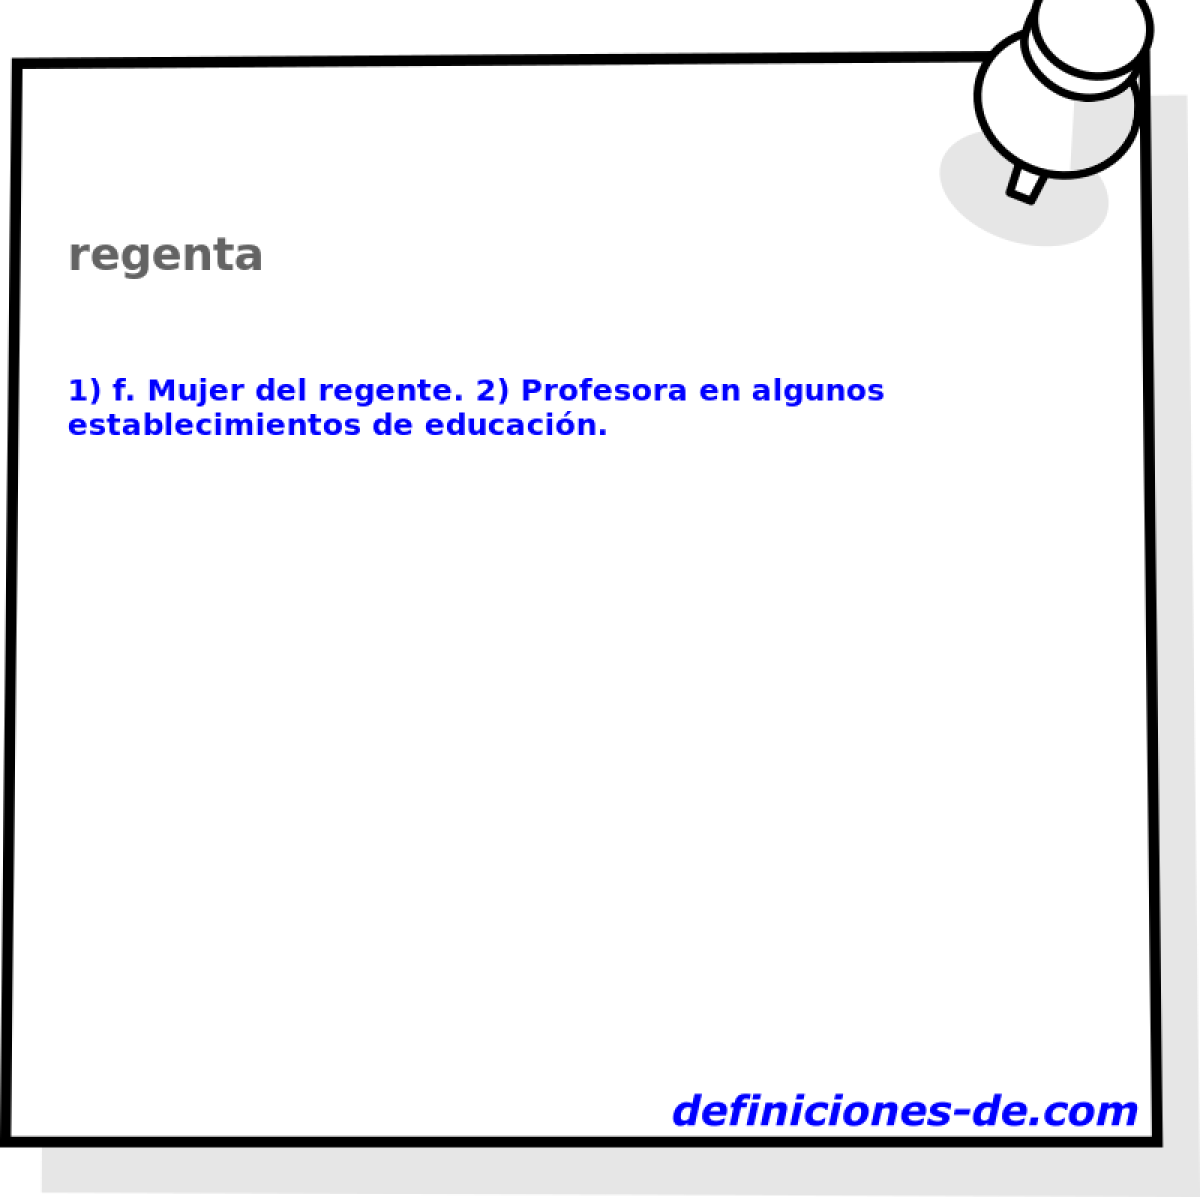 regenta 